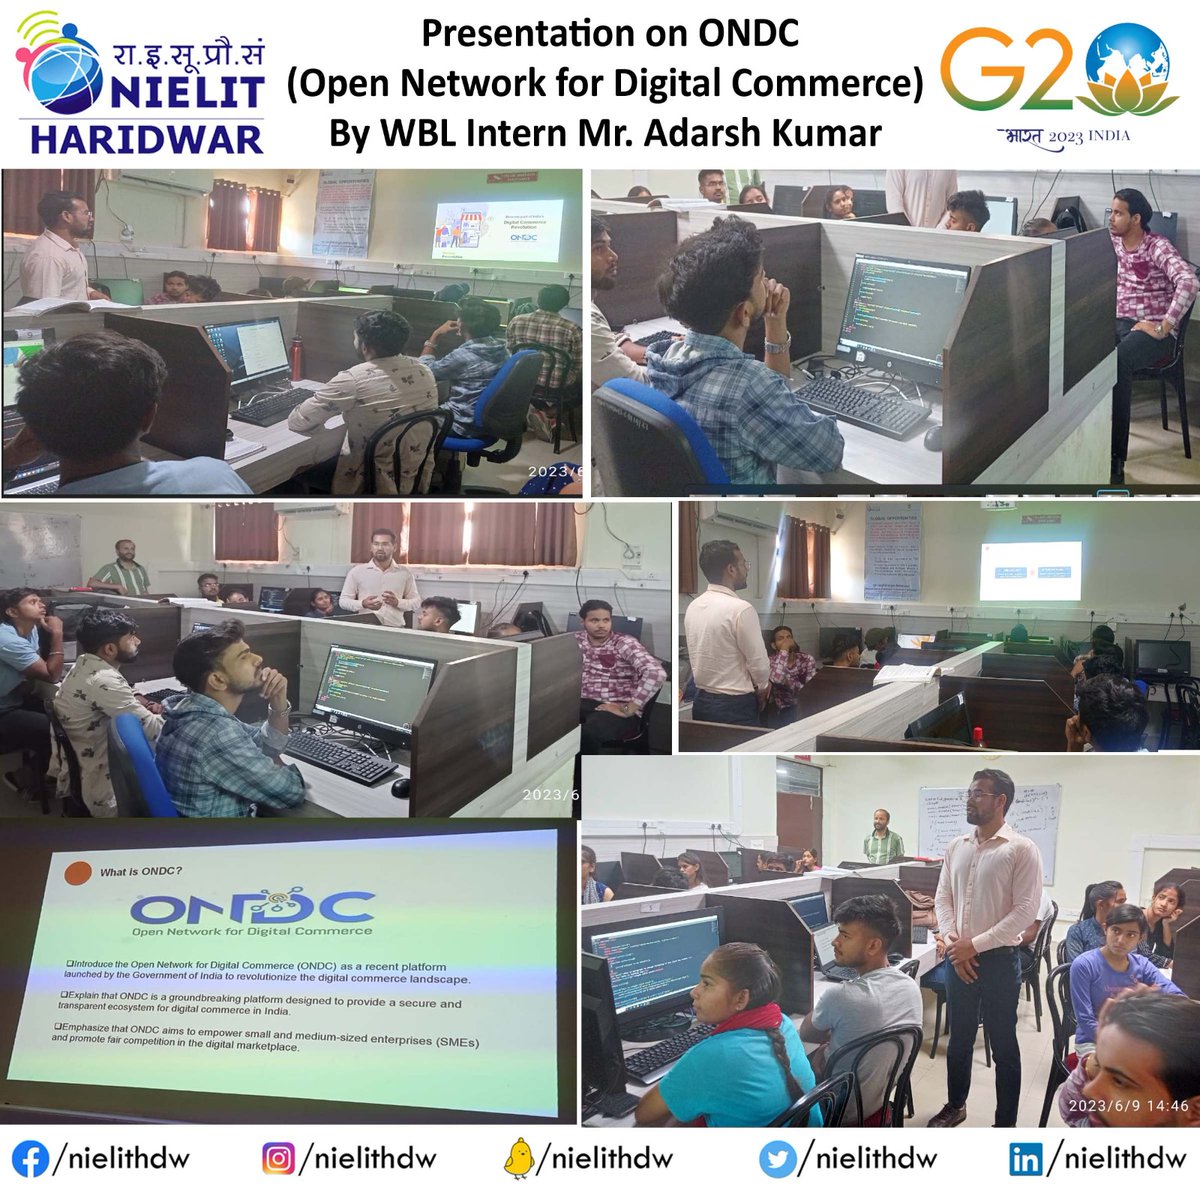 Mr. Adarsh Kumar, Intern at NIELIT Haridwar under WBL program, gave a presentation on Open Network for Digital Commerce (ONDC).